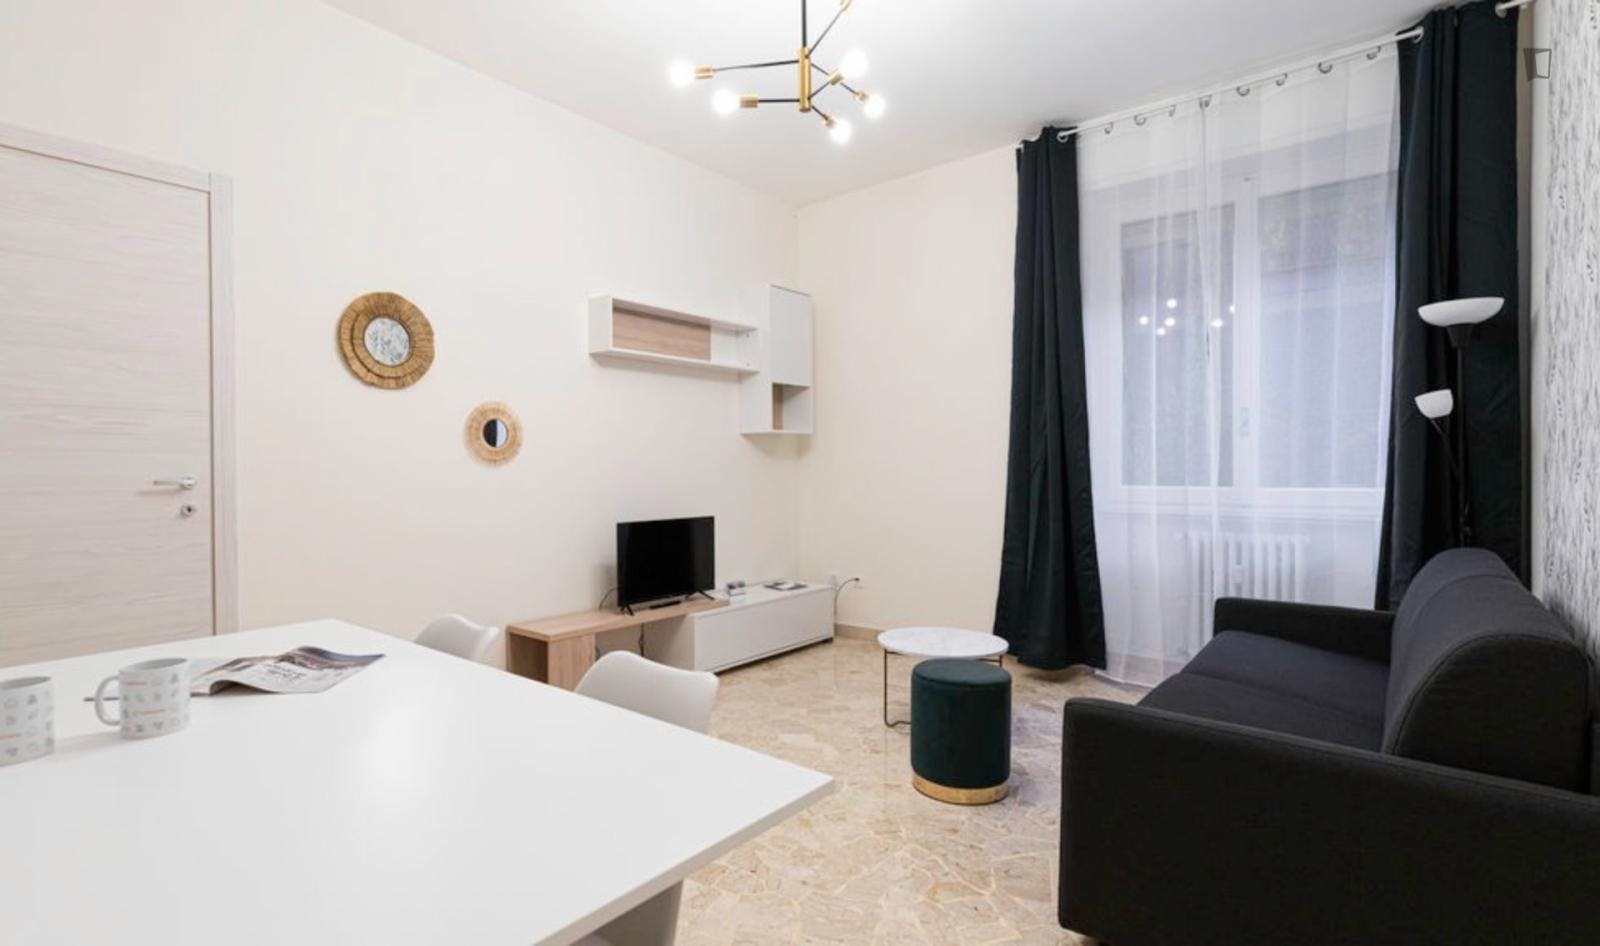 Appealing 1-Bedroom apartment near Villa Reale di Monza